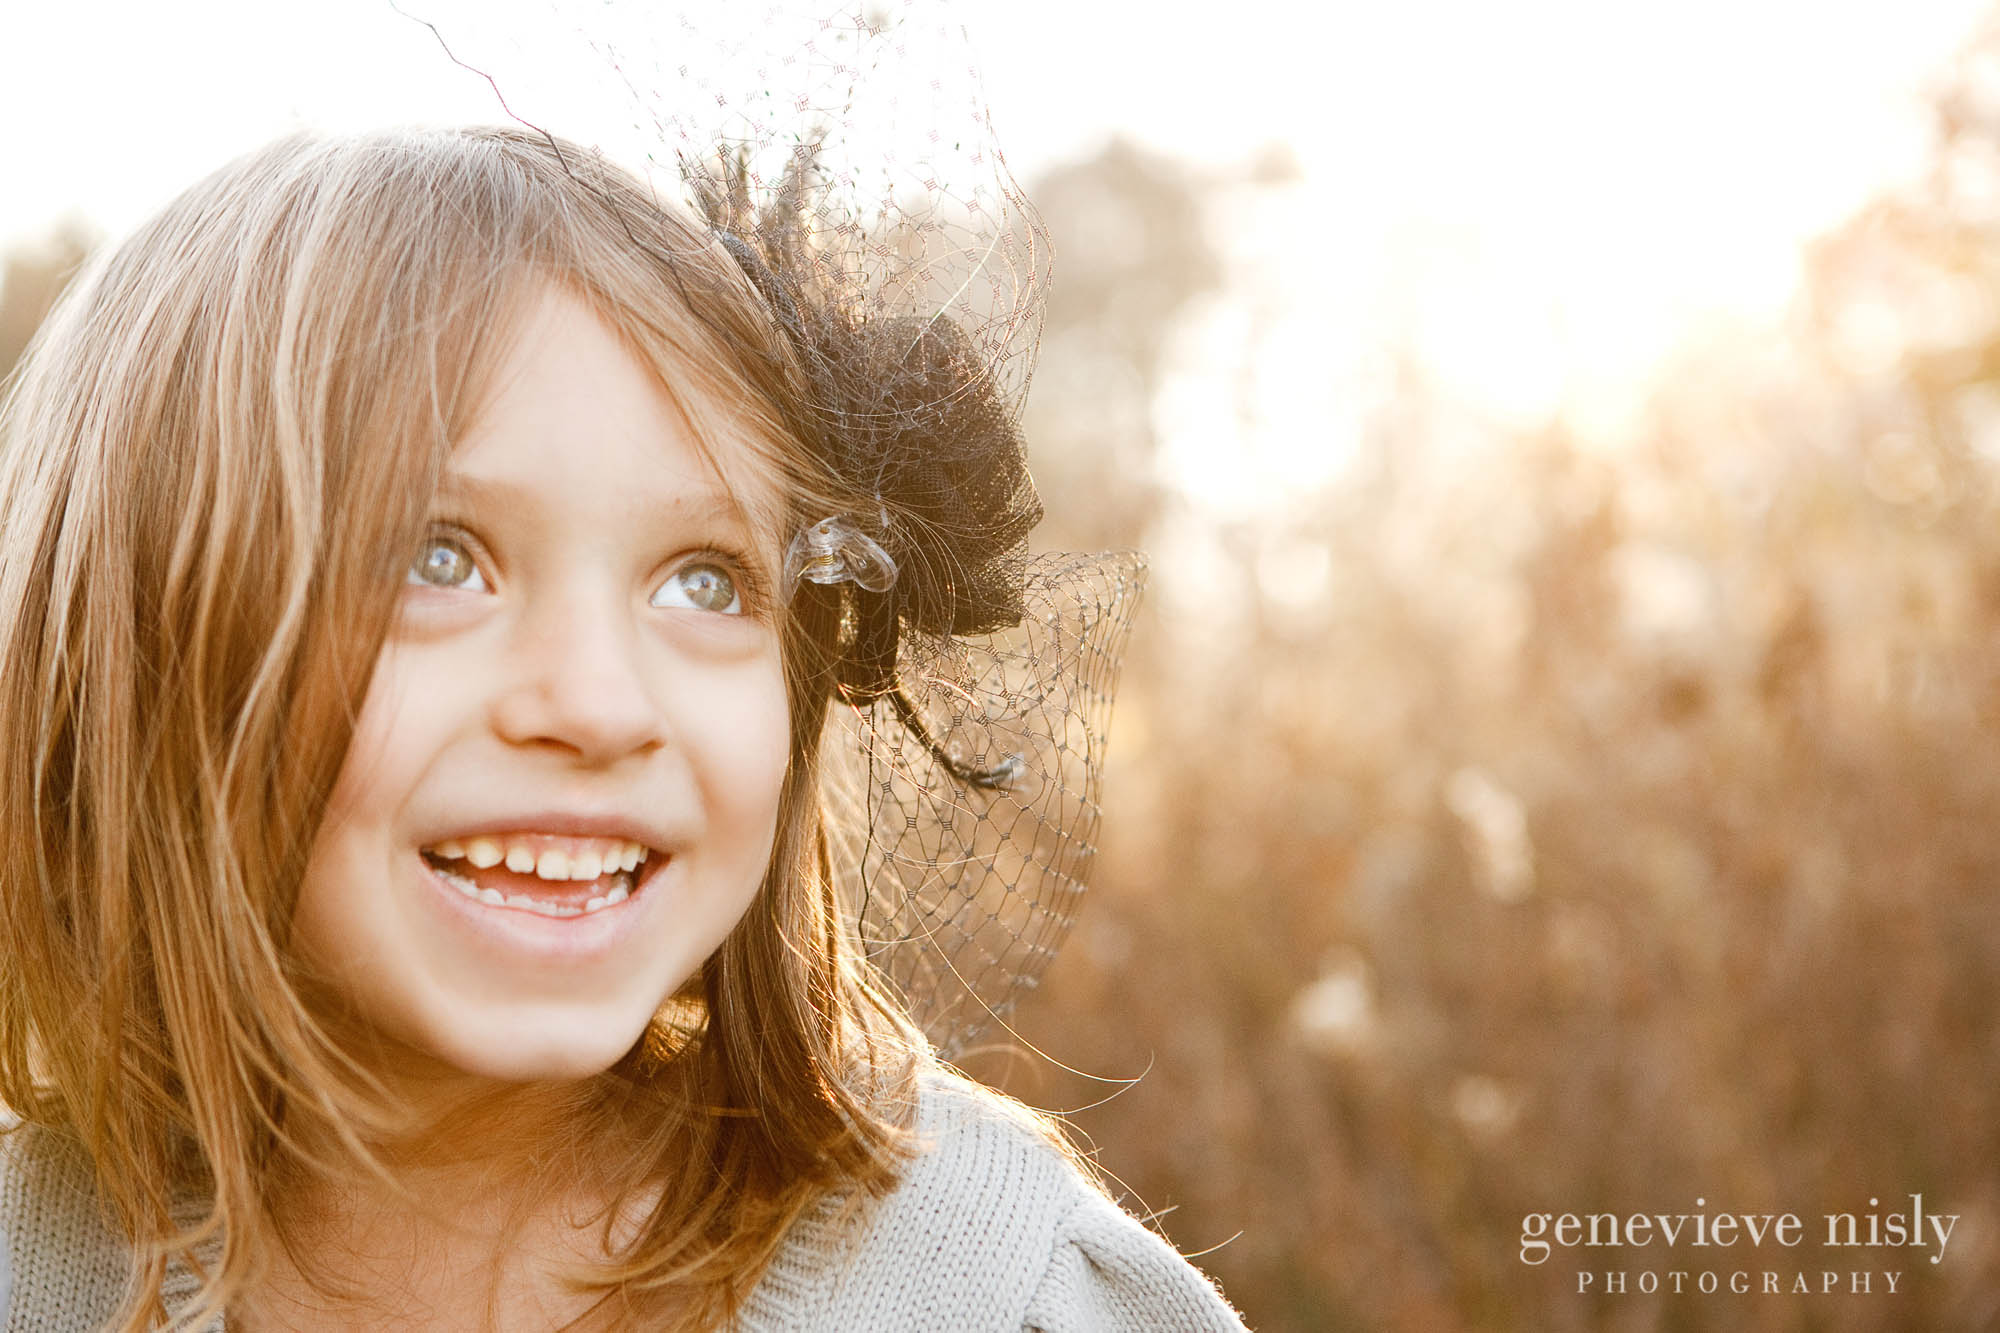  Copyright Genevieve Nisly Photography, Green, Kids, Ohio, Portraits